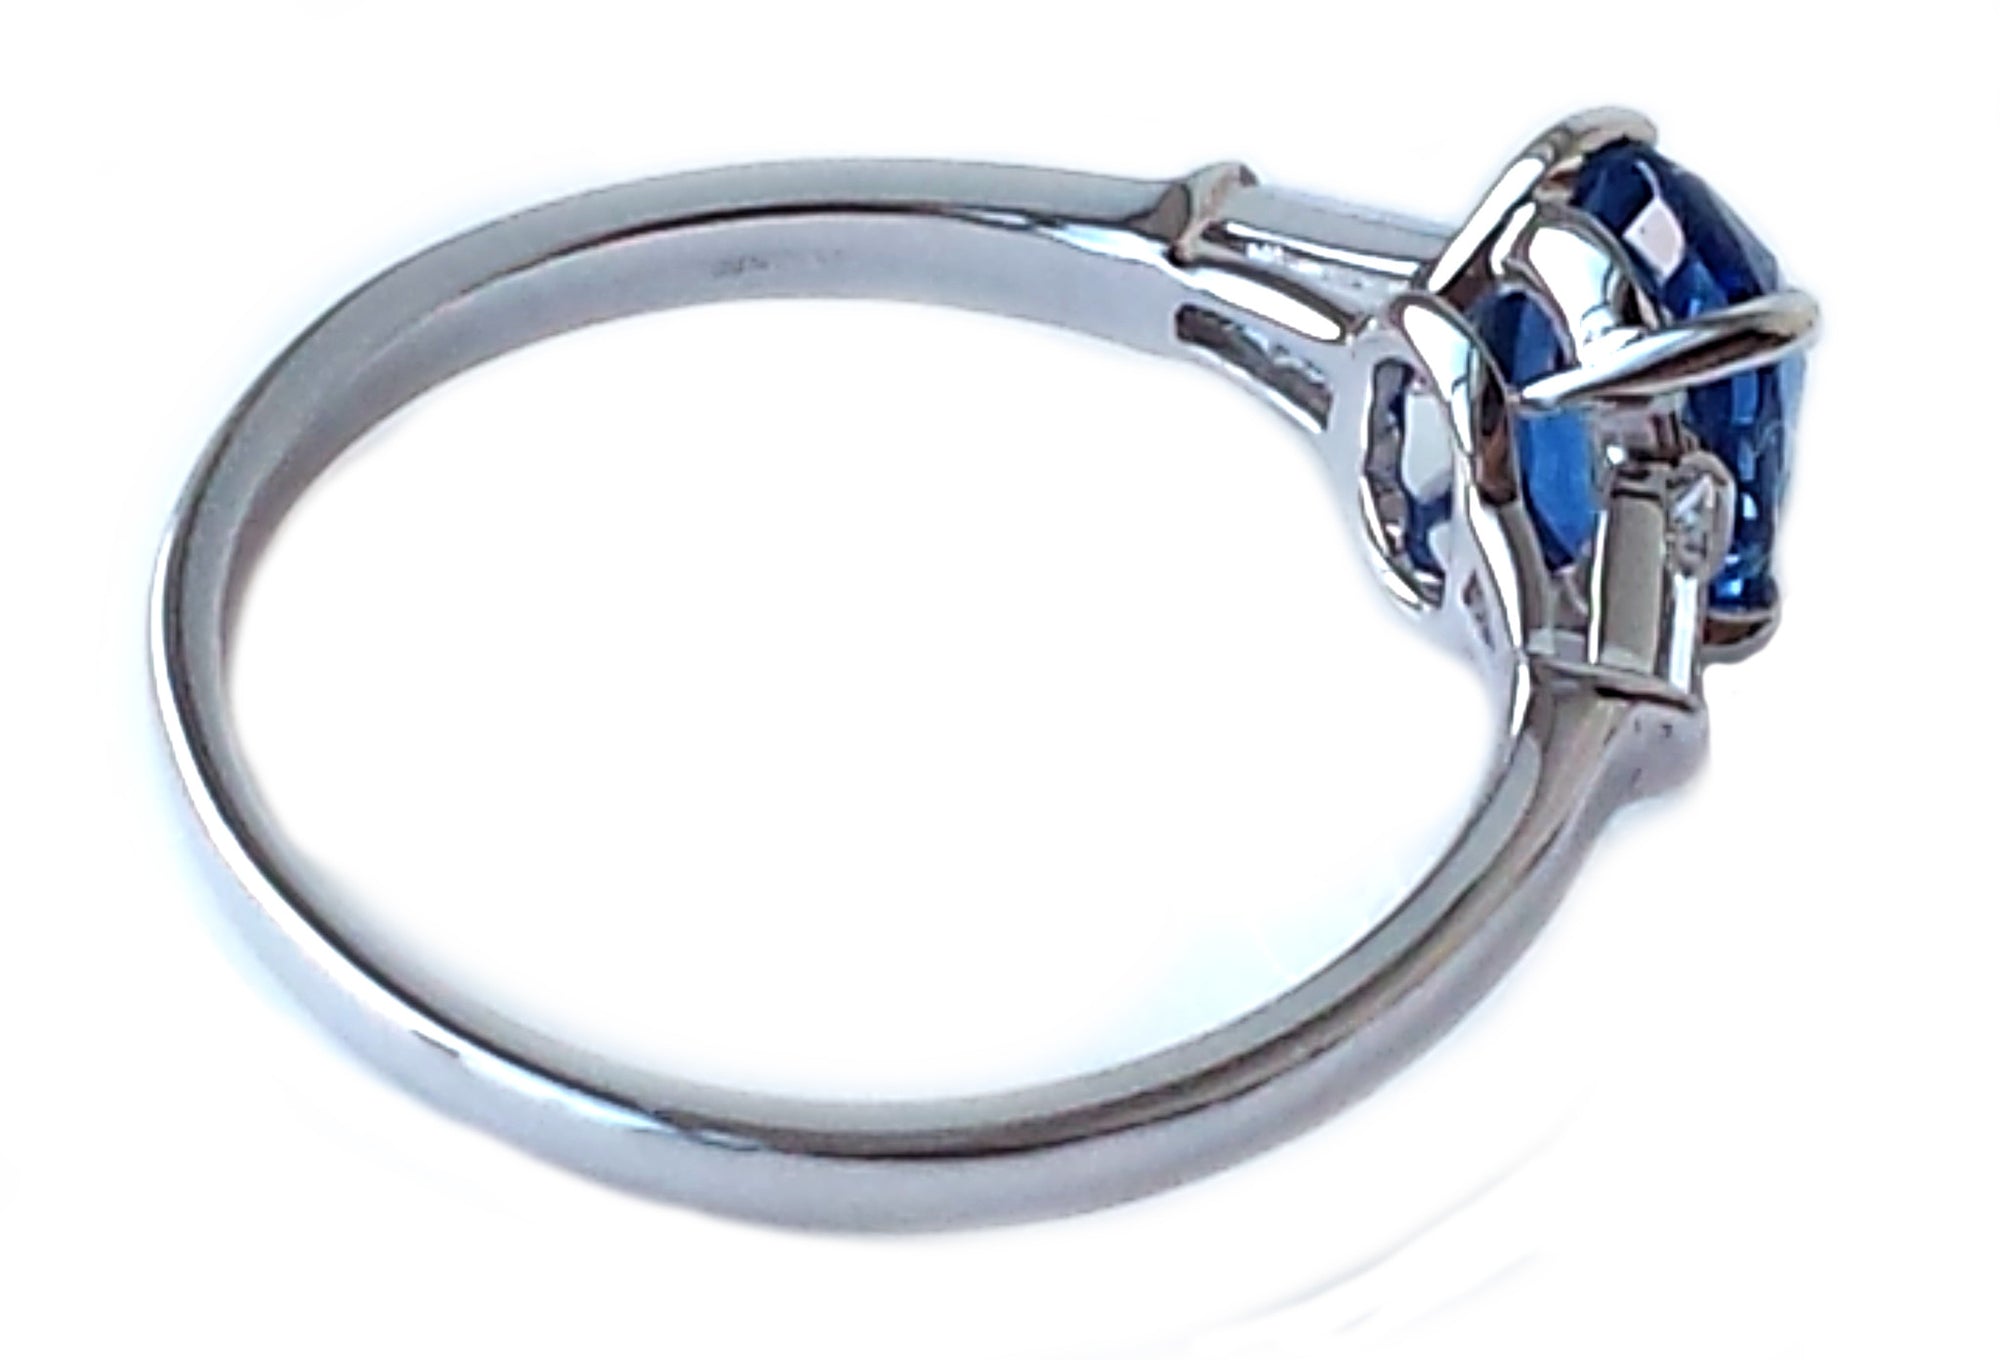 Vintage 1970s Bulgari Sapphire & Diamond Ring in 18k White Gold, Sz J